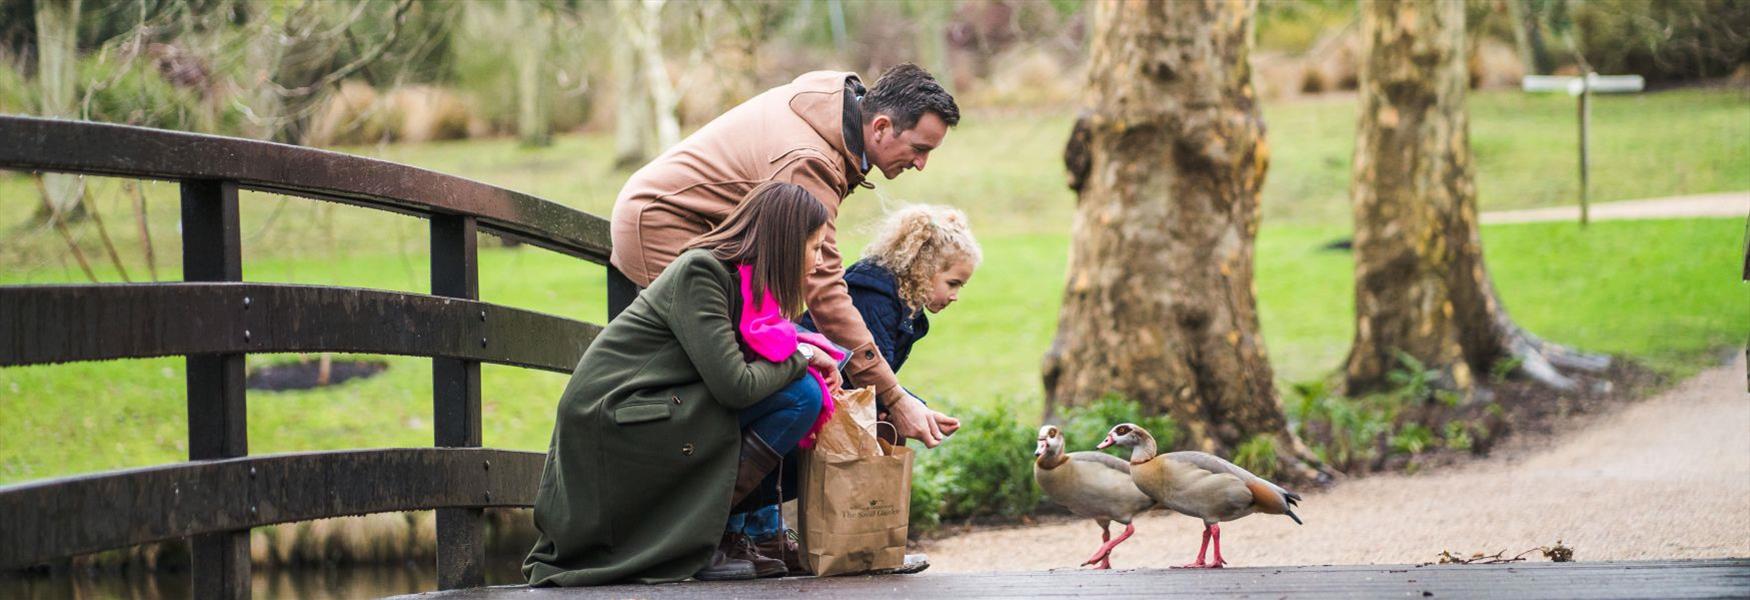 Feeding geese in The Savill Garden, Windsor Great Park